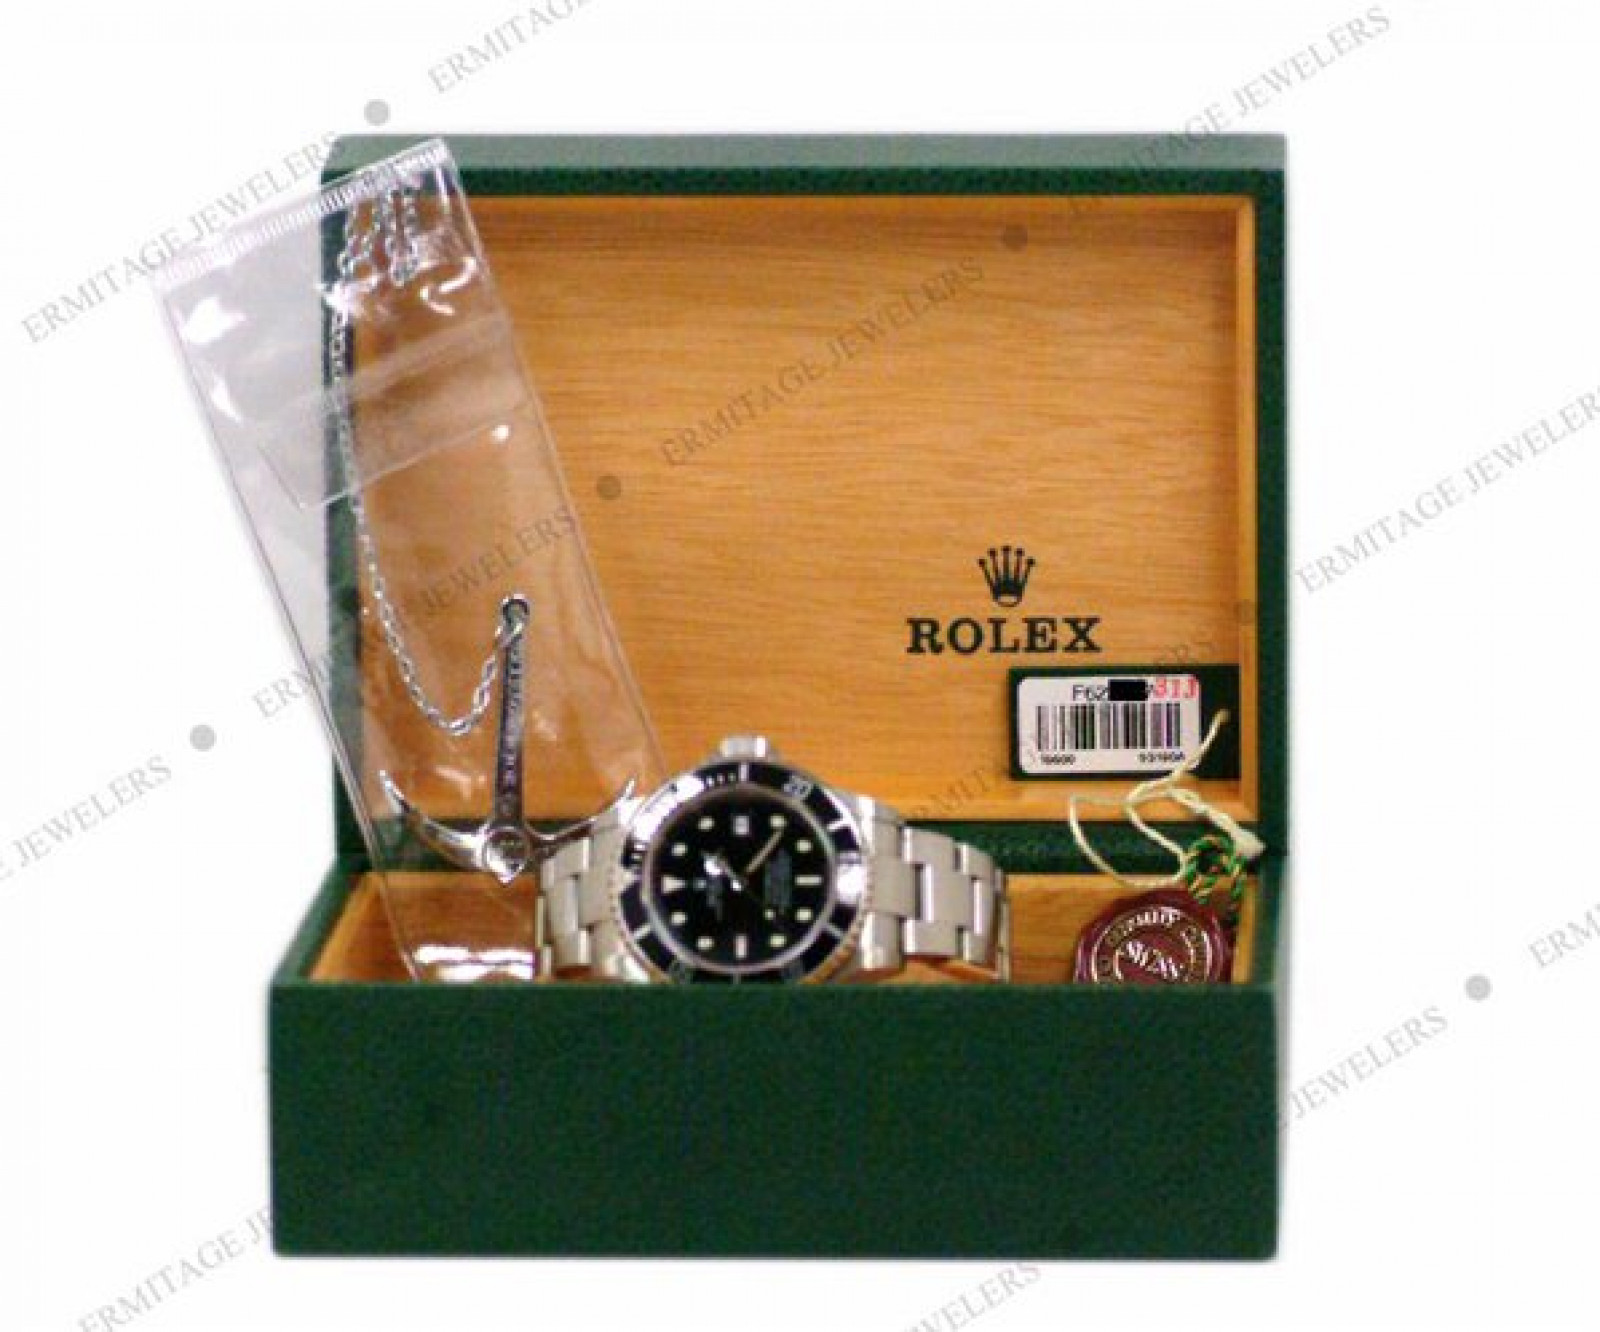 Rolex Oyster Perpetual Sea-Dweller 16600 Steel